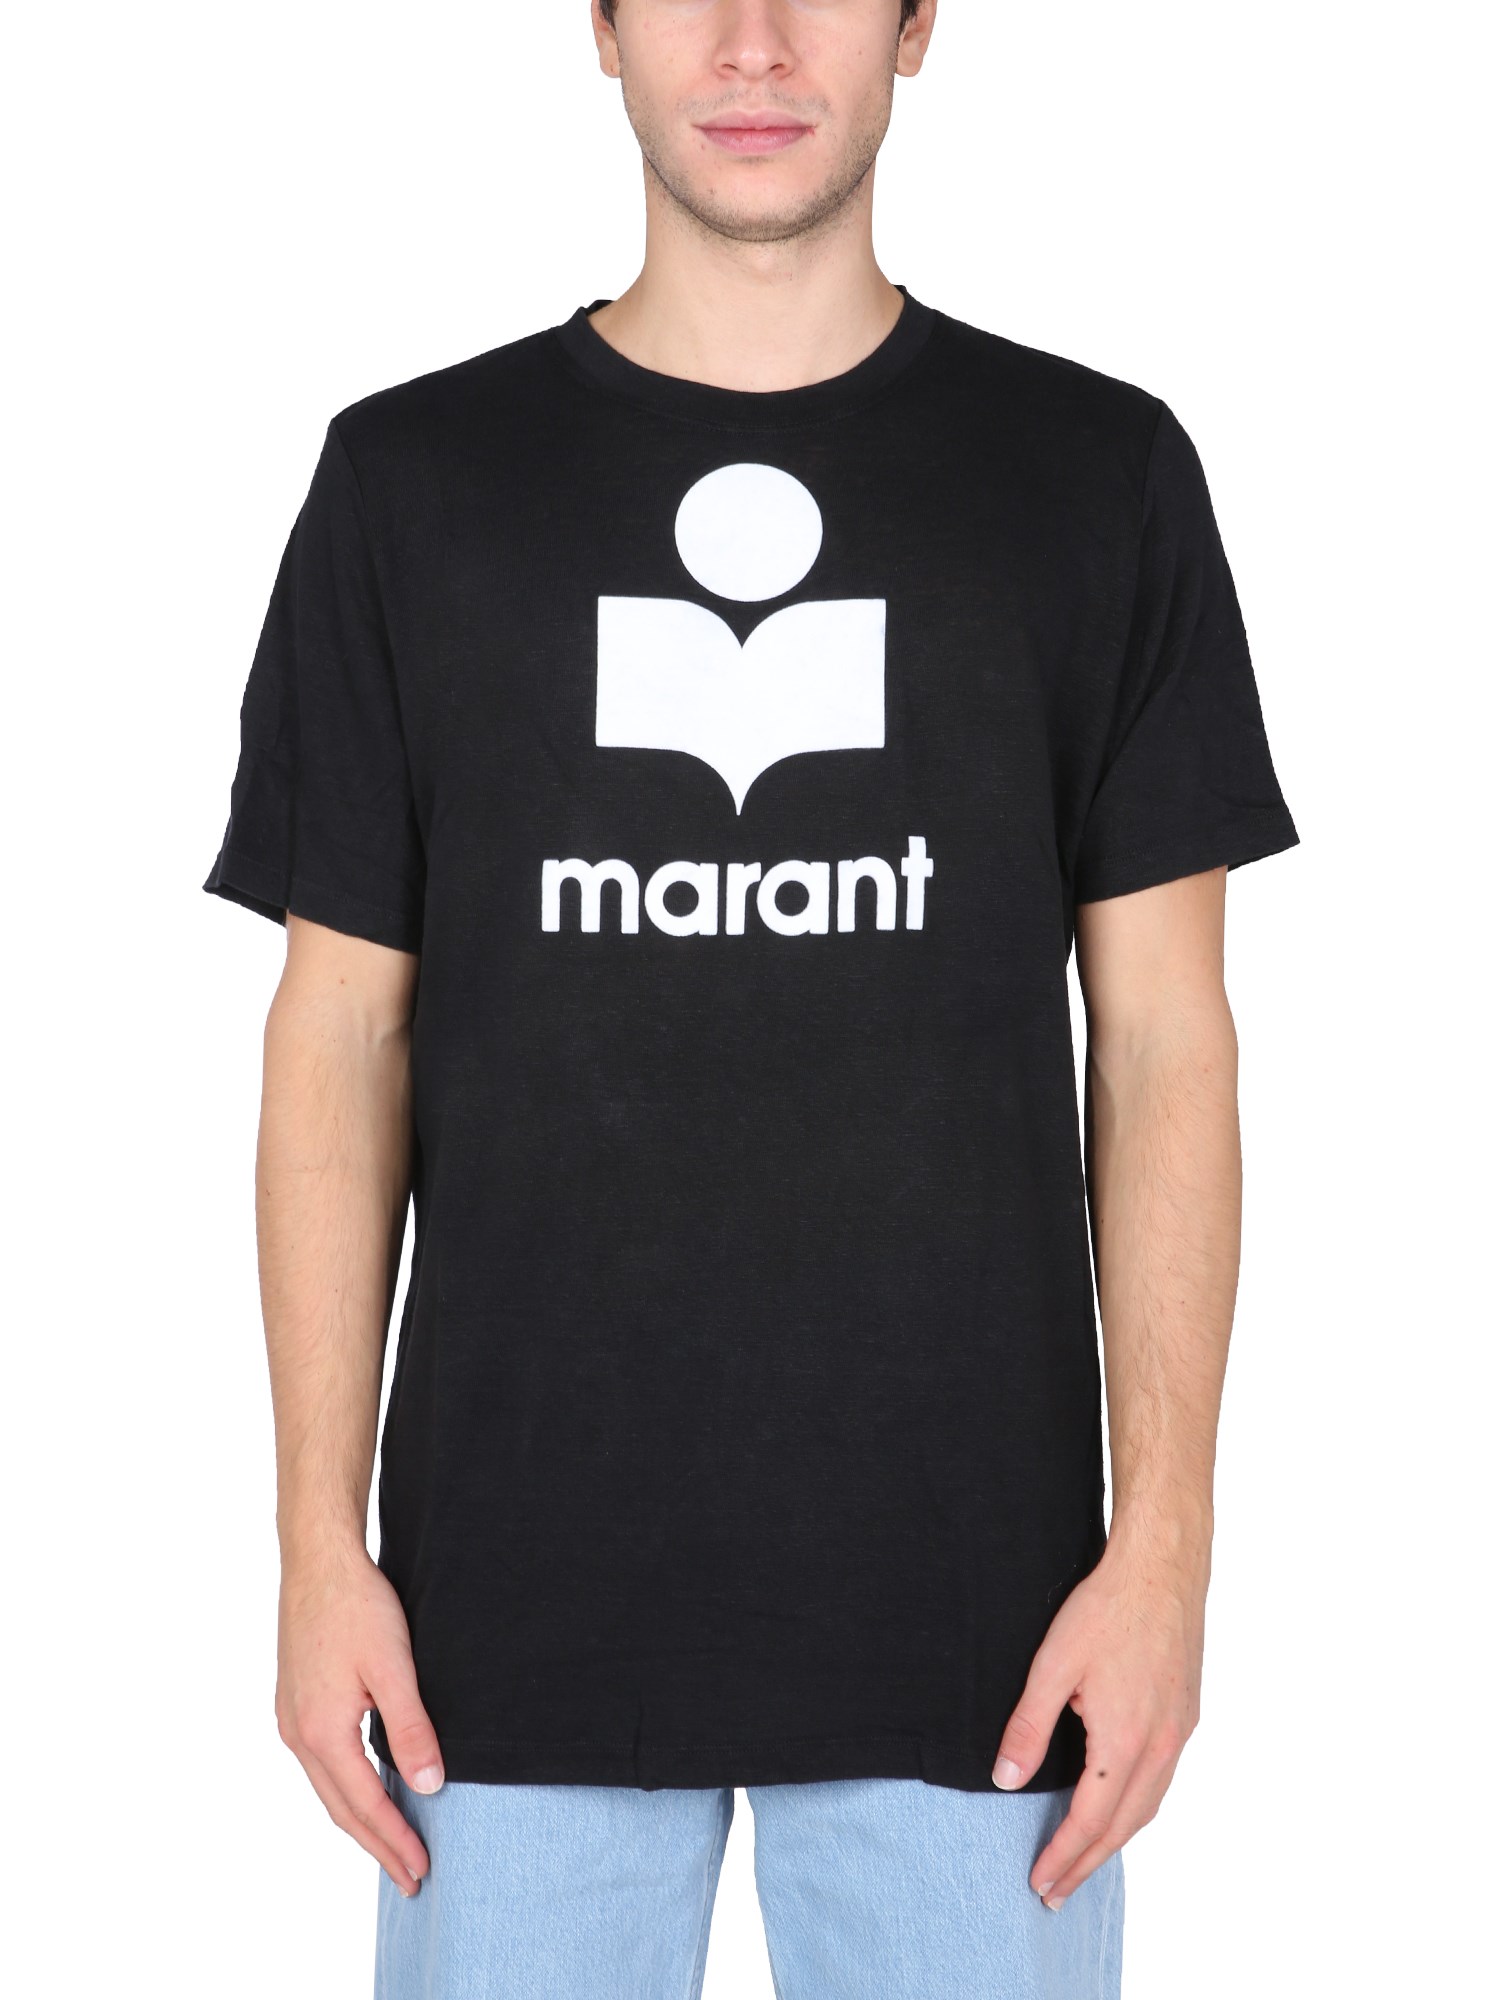 isabel marant "karman" t-shirt